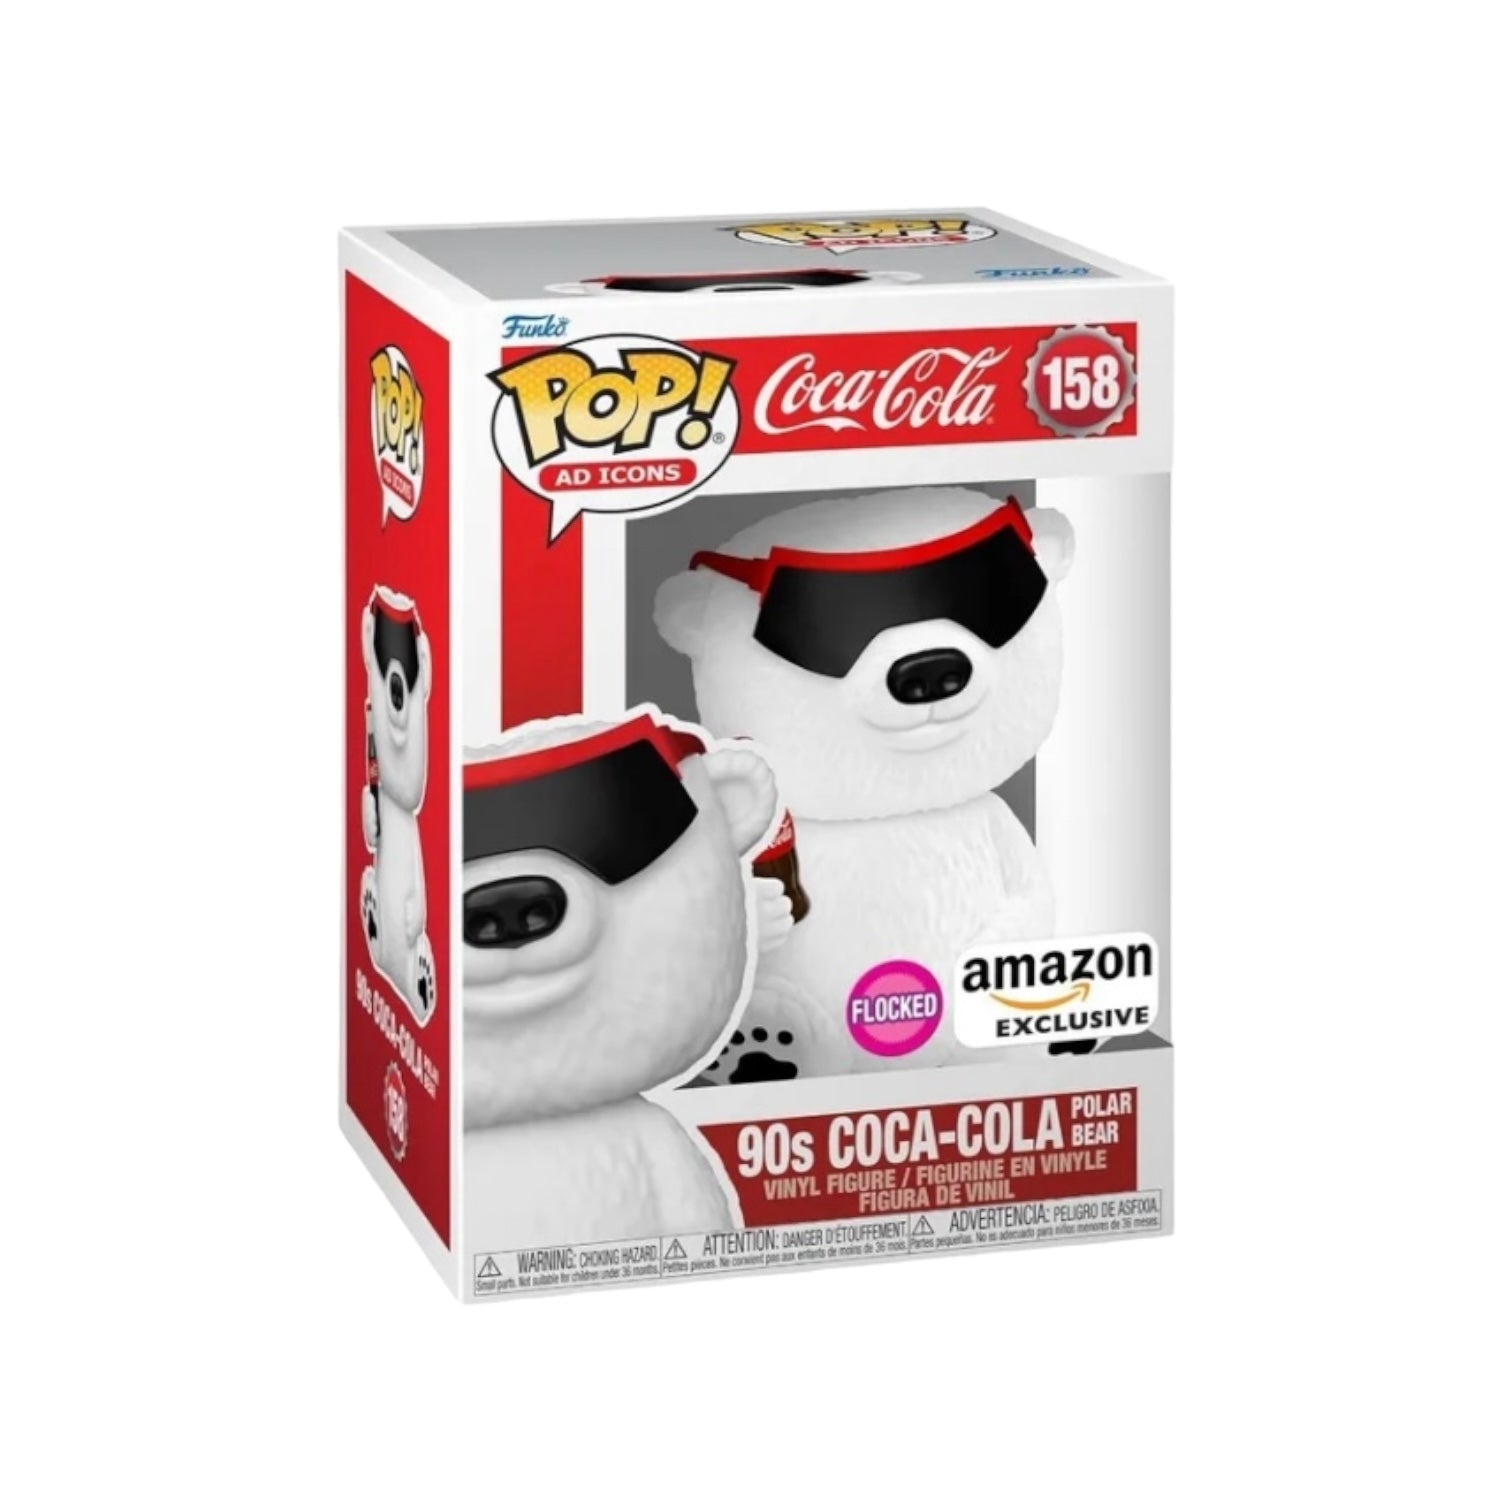 90's Coca-Cola Polar Bear #158 Funko Pop! - Ad Icons - Flocked Amazon Exclusive